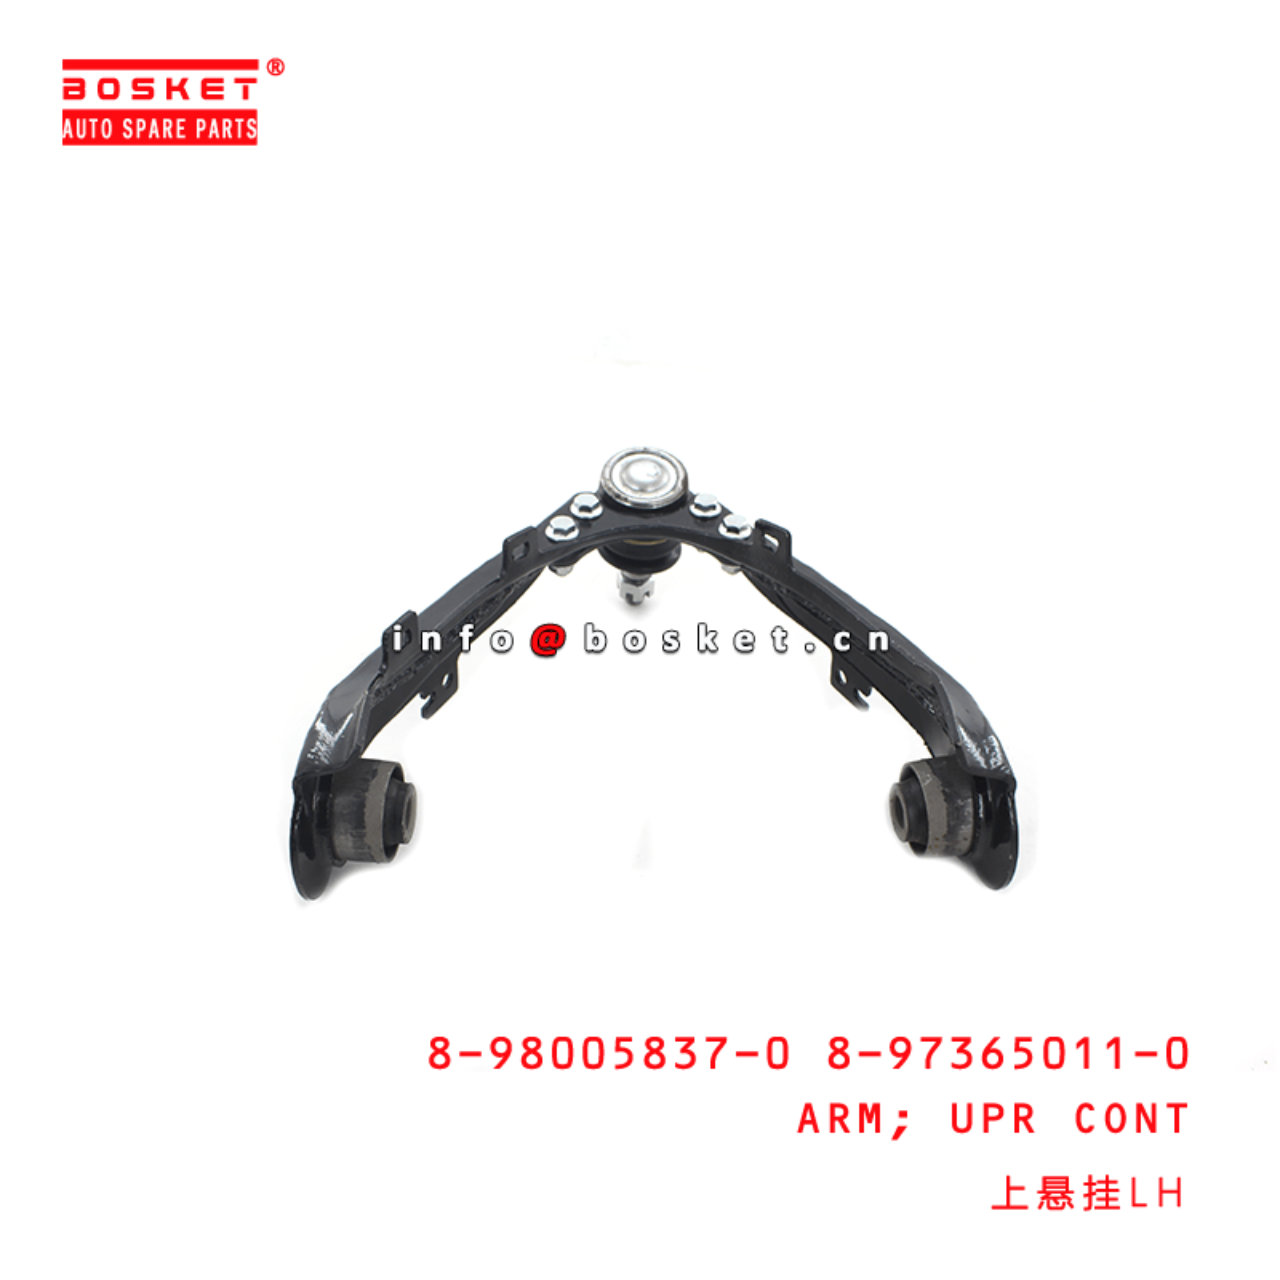 8-98005837-0 8-97365011-0 Upper Control Arm 8980058370 8973650110 Suitable for ISUZU D-MAX 4X2